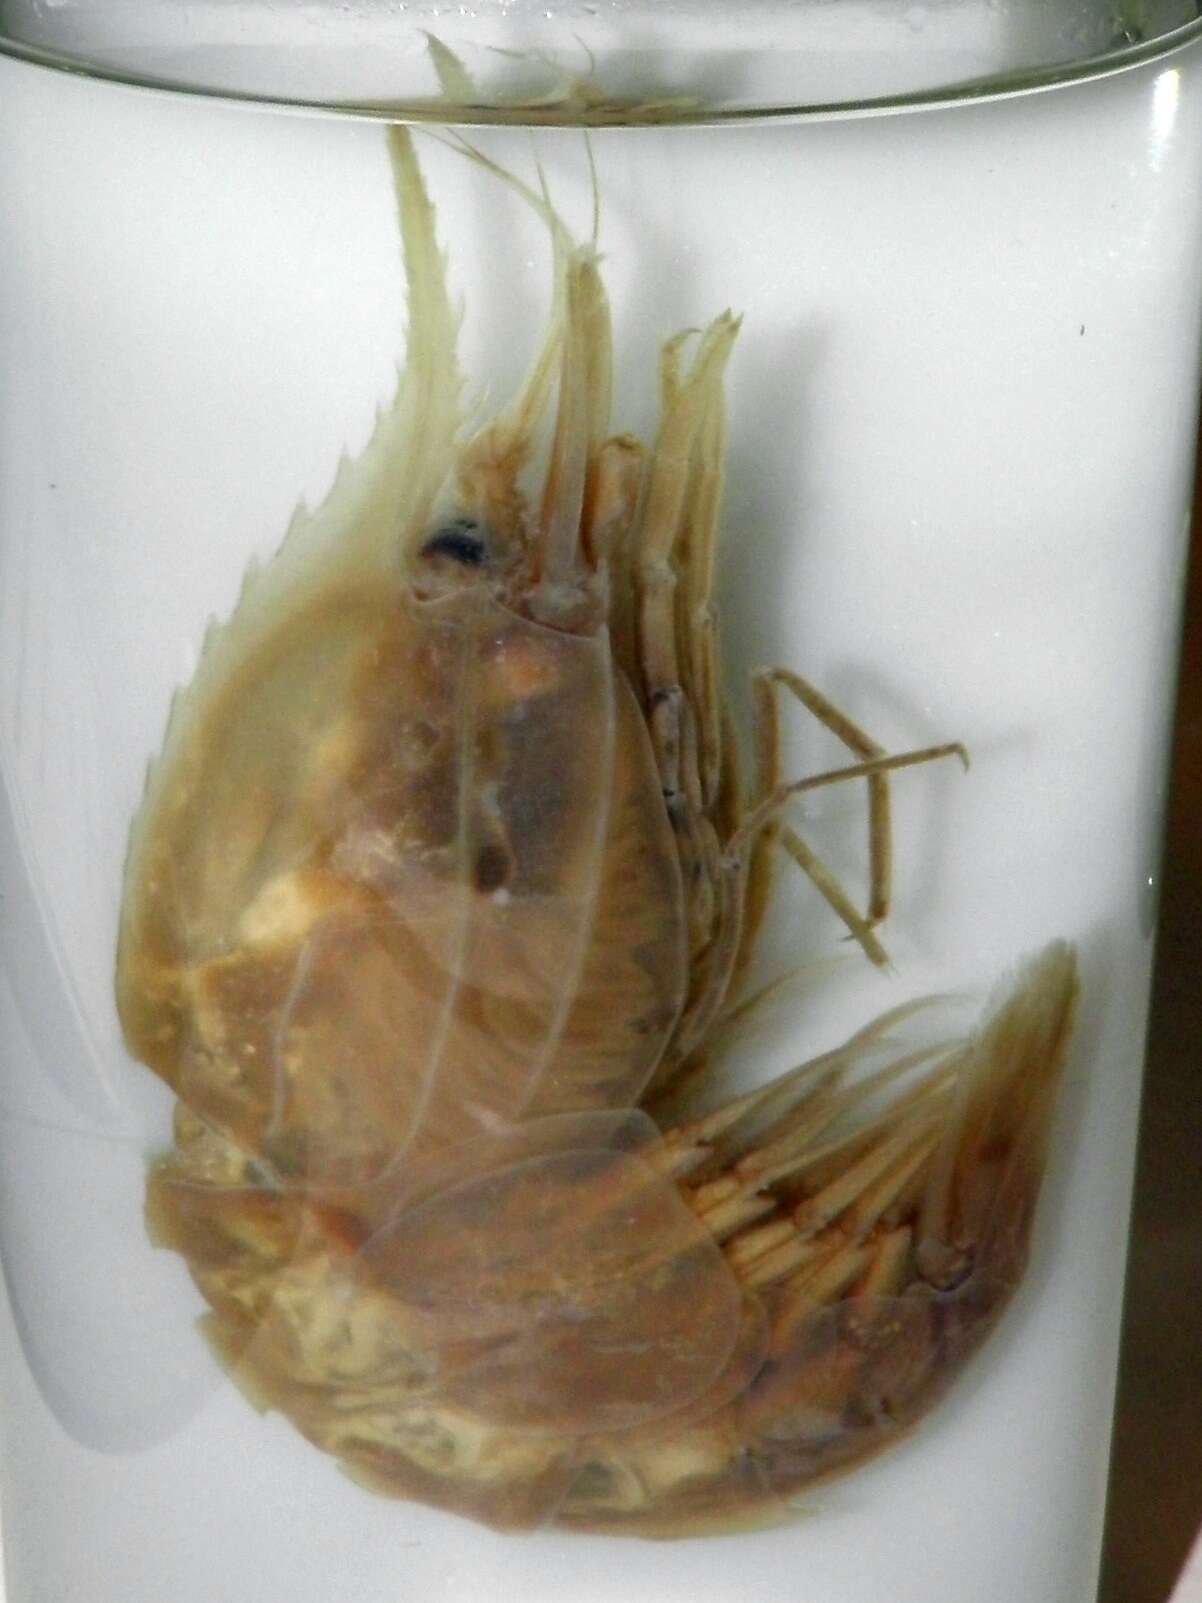 Image of Greenland shrimp